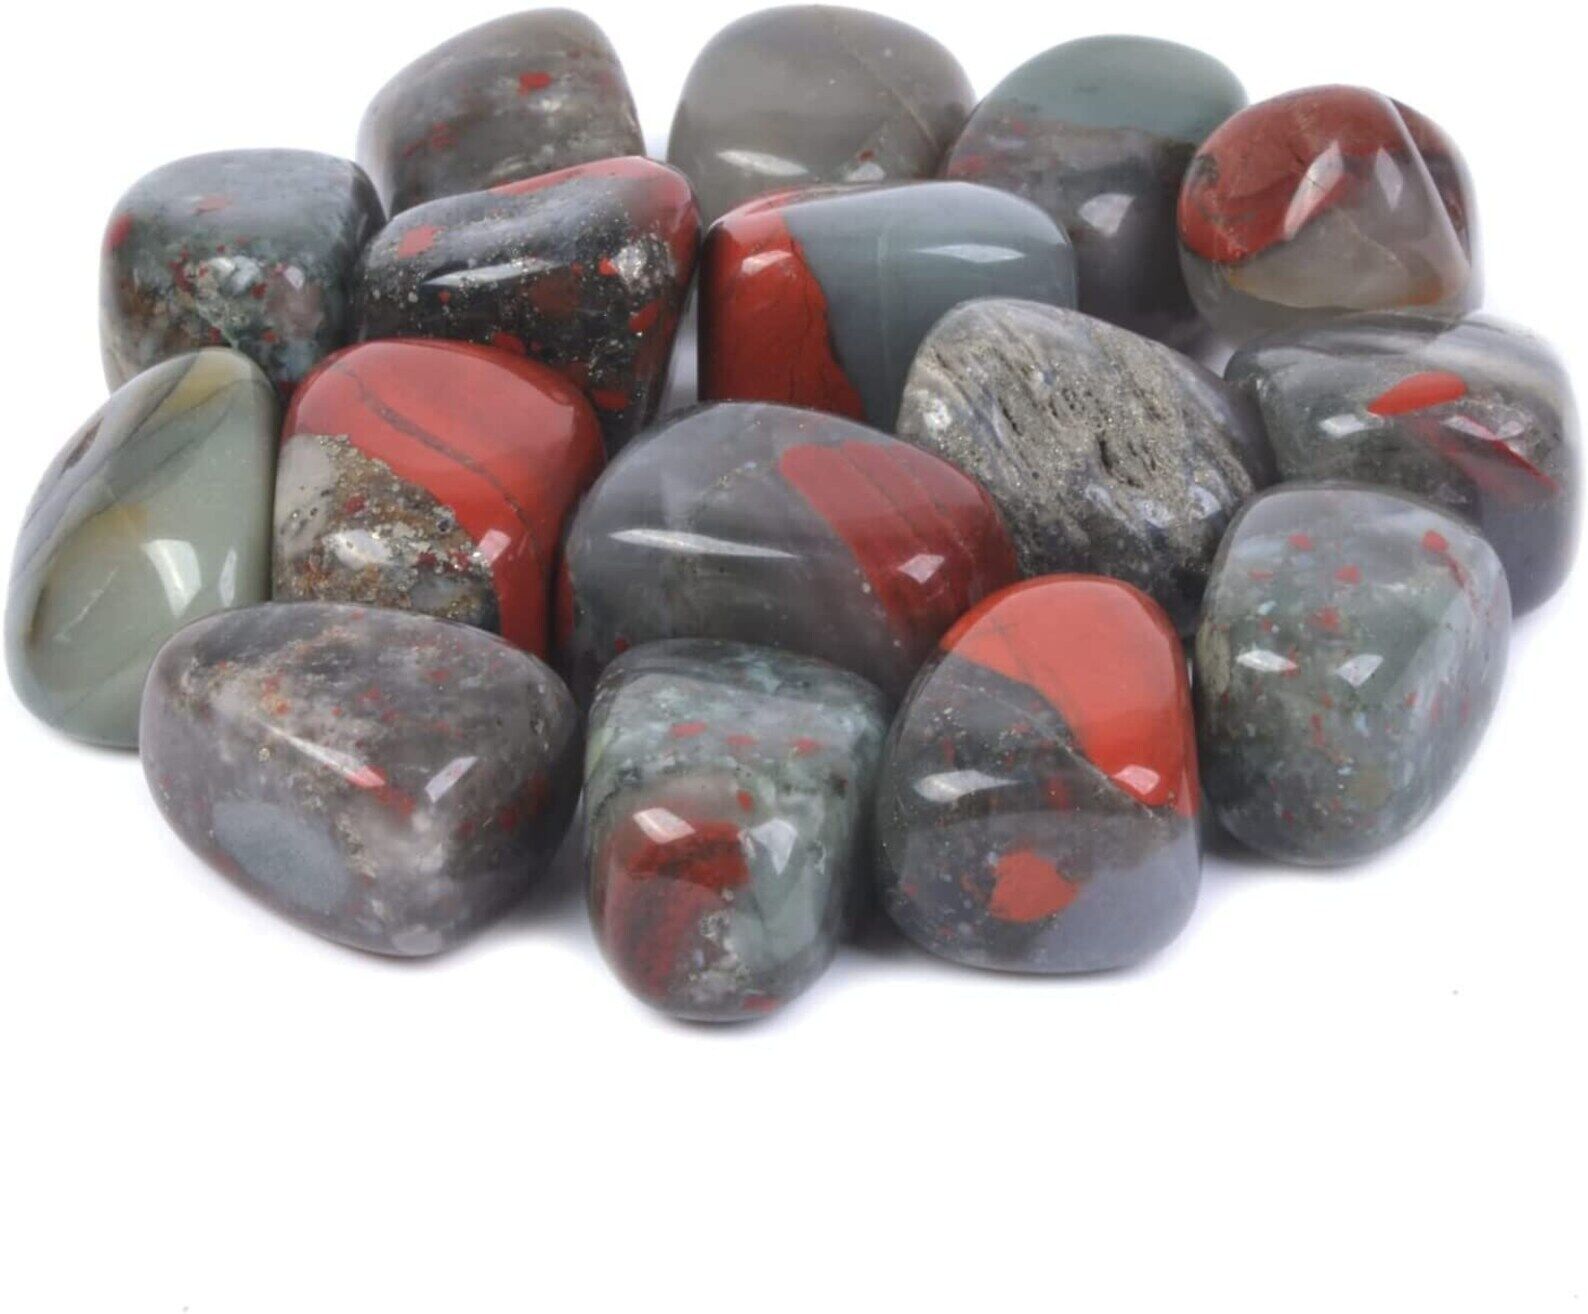 African Blood Stone High Graded Tumbled Stone - 1 KG/ 1 LB/ 0.5 LB/ 5 PCS/  1 PC